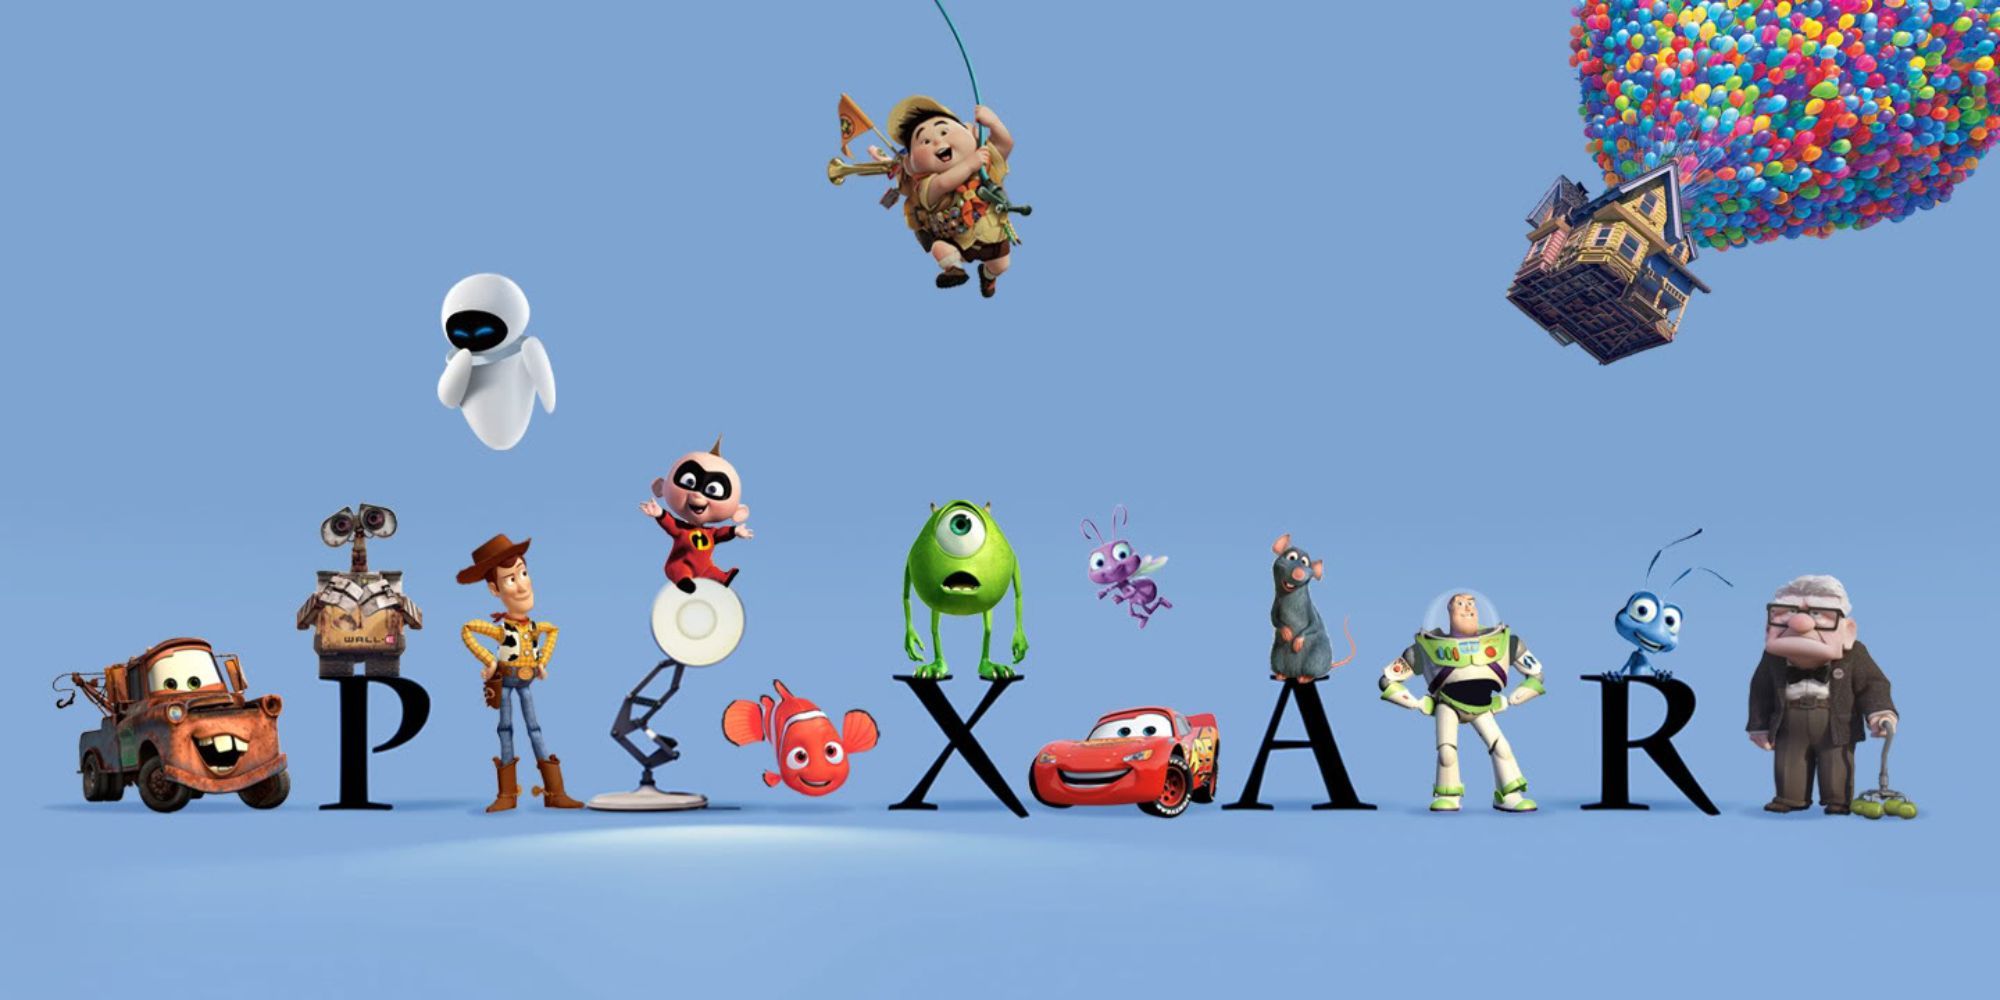 10 Best Pixar Films Ranked, According To IMDB